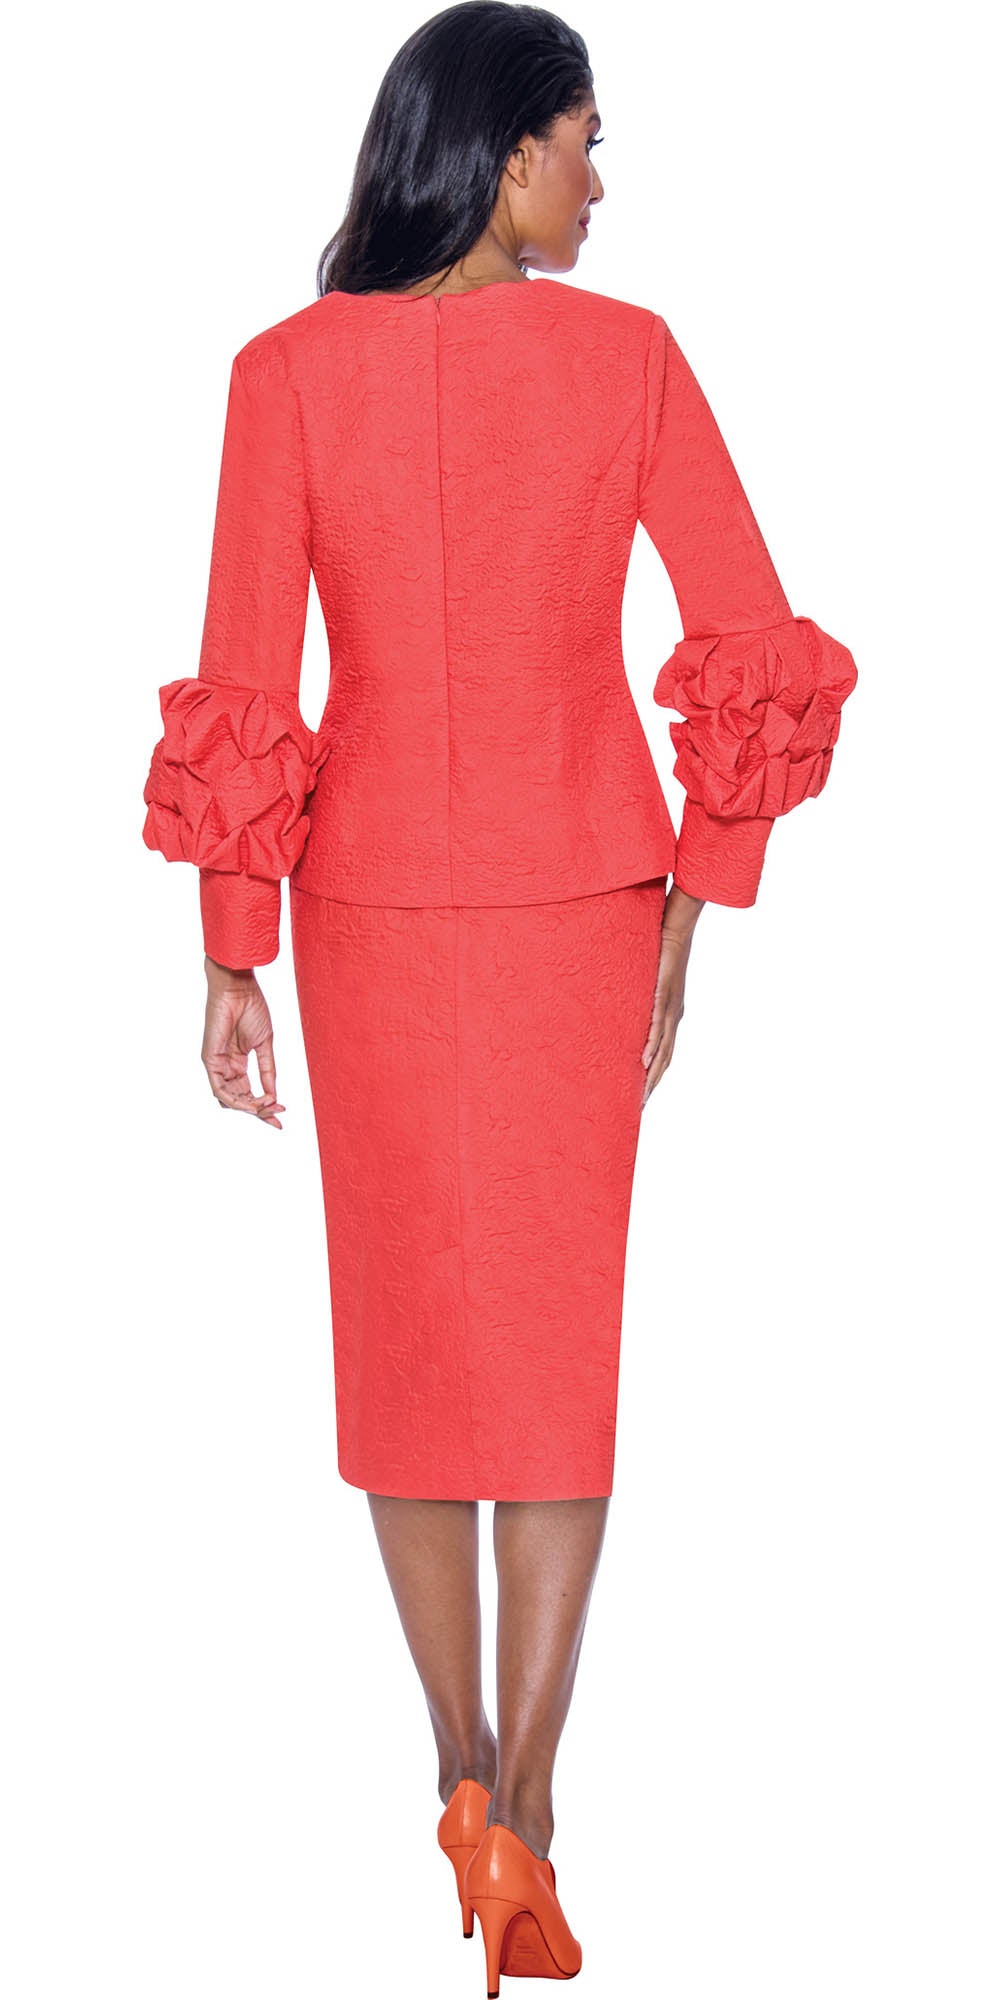 Stellar Looks 2012 - Coral - Crinkle Skirt Set